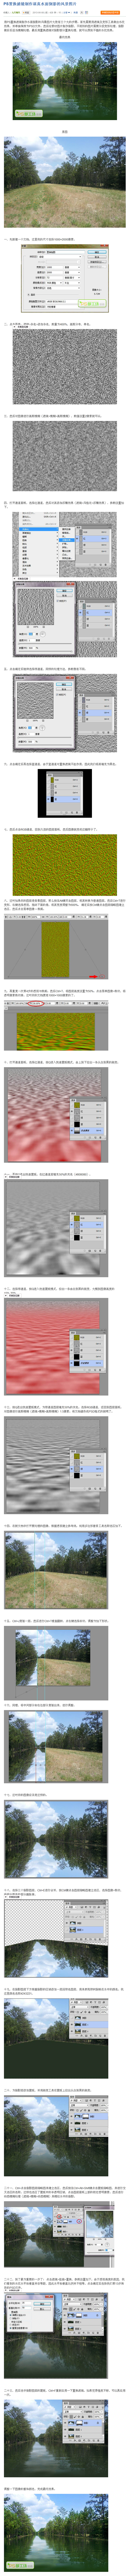 PS置换滤镜制作逼真水面倒影的风景图片